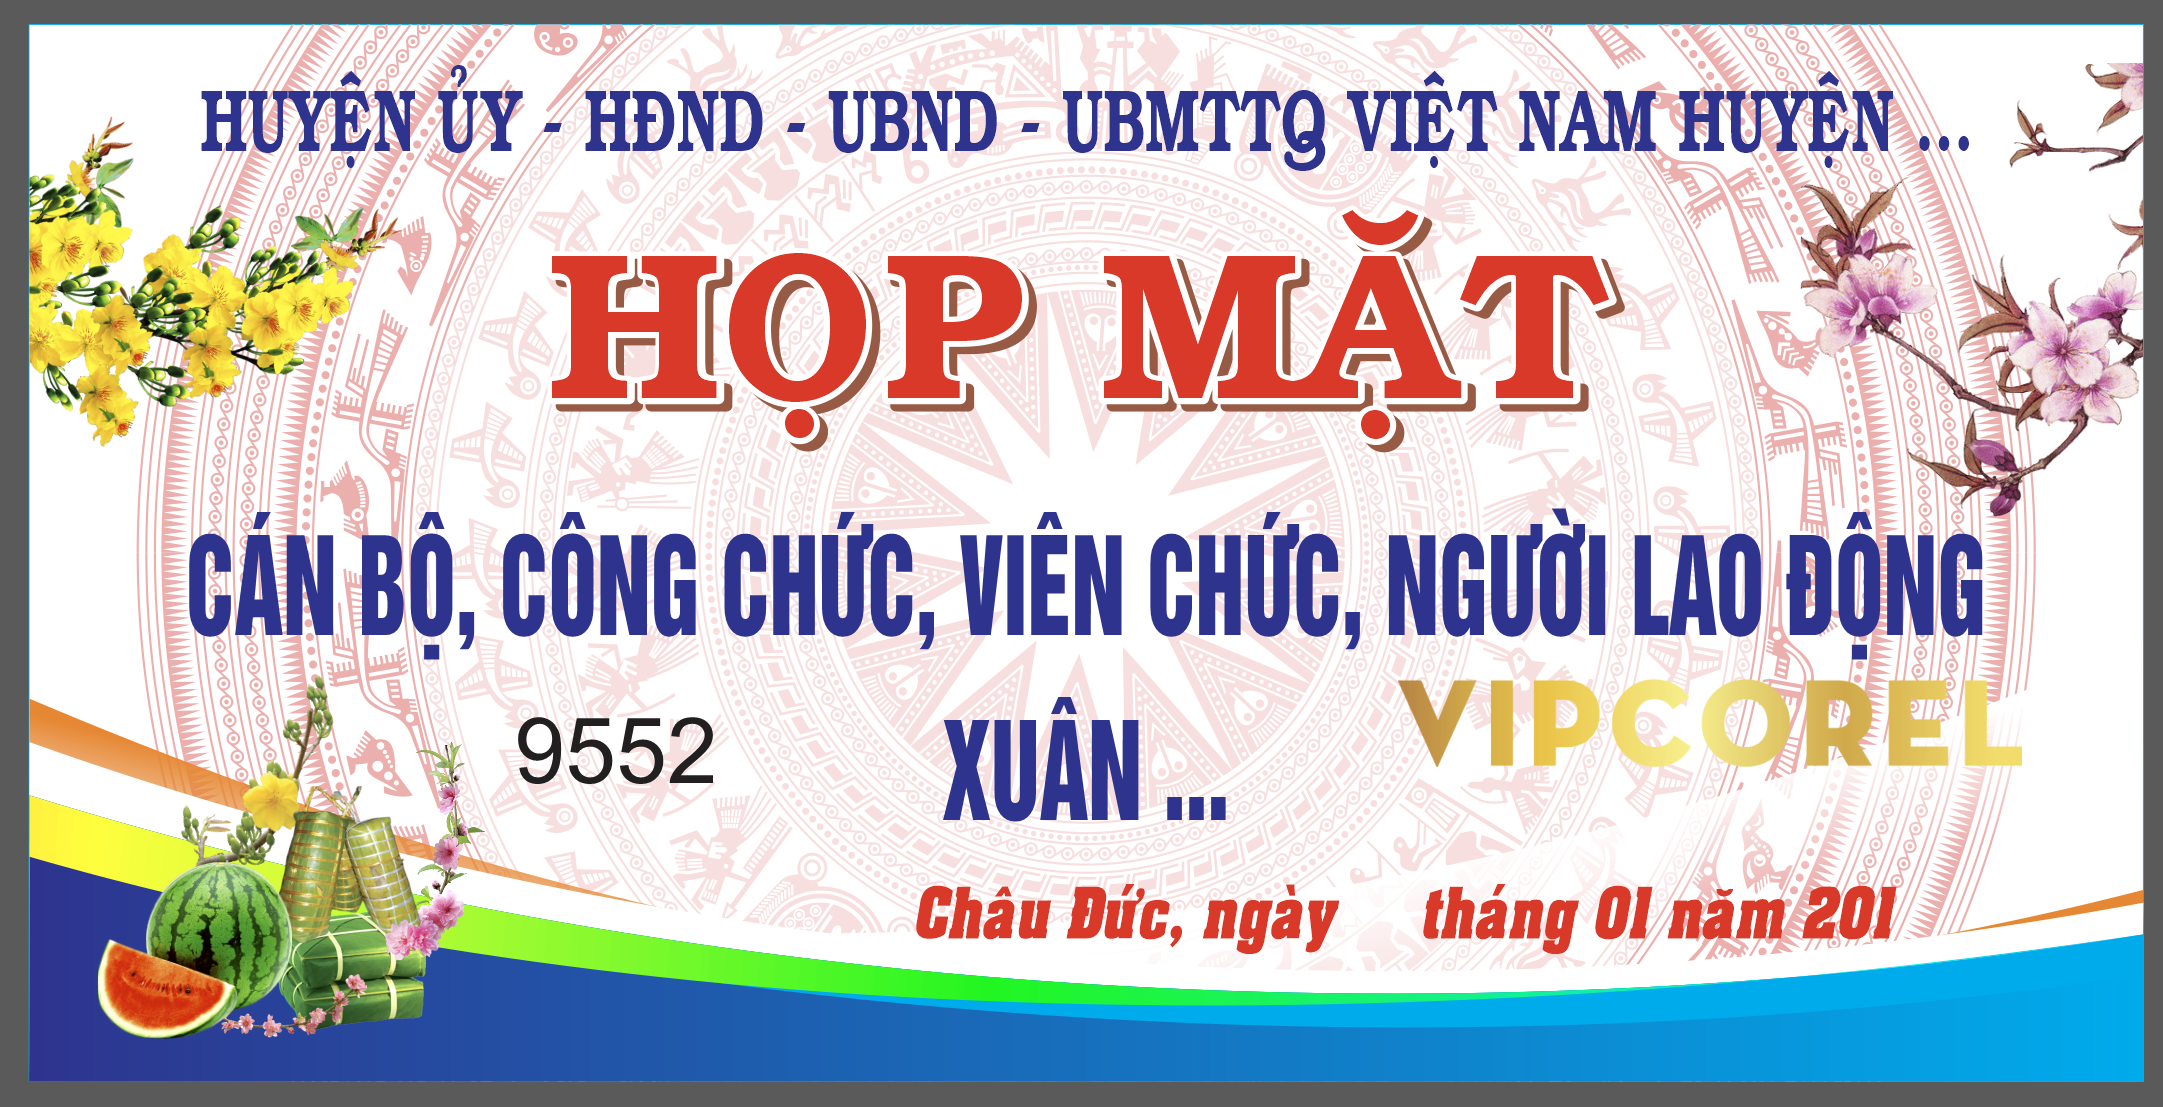 hop mat can bo - cong chuc - vien chuc - nguoi lao dong.png